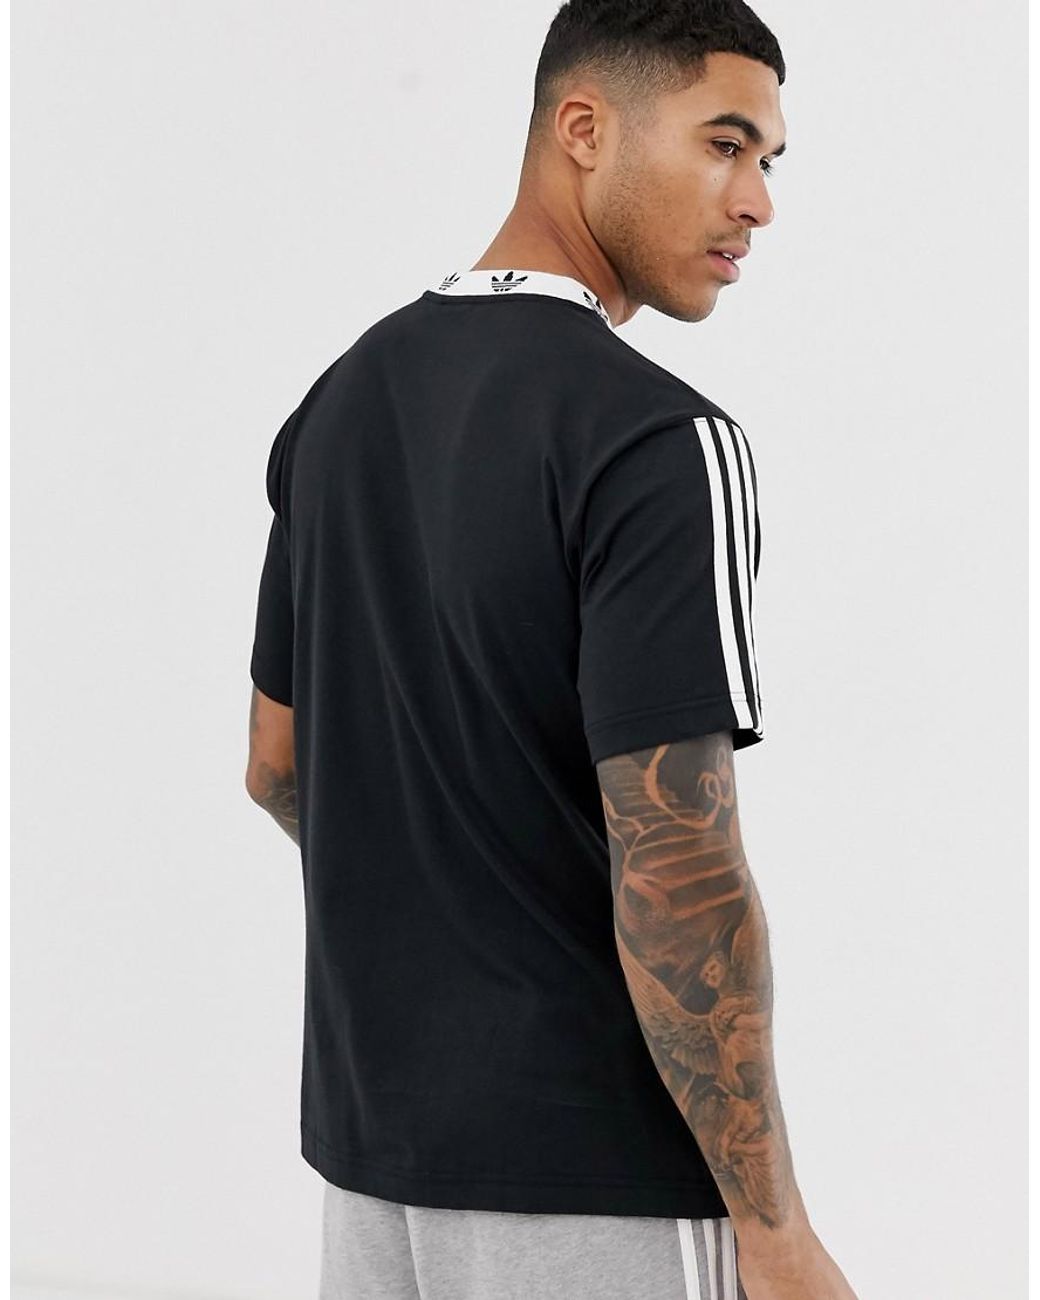 adidas Originals T-shirt With Trefoil Neck Print In Black for Men | Lyst